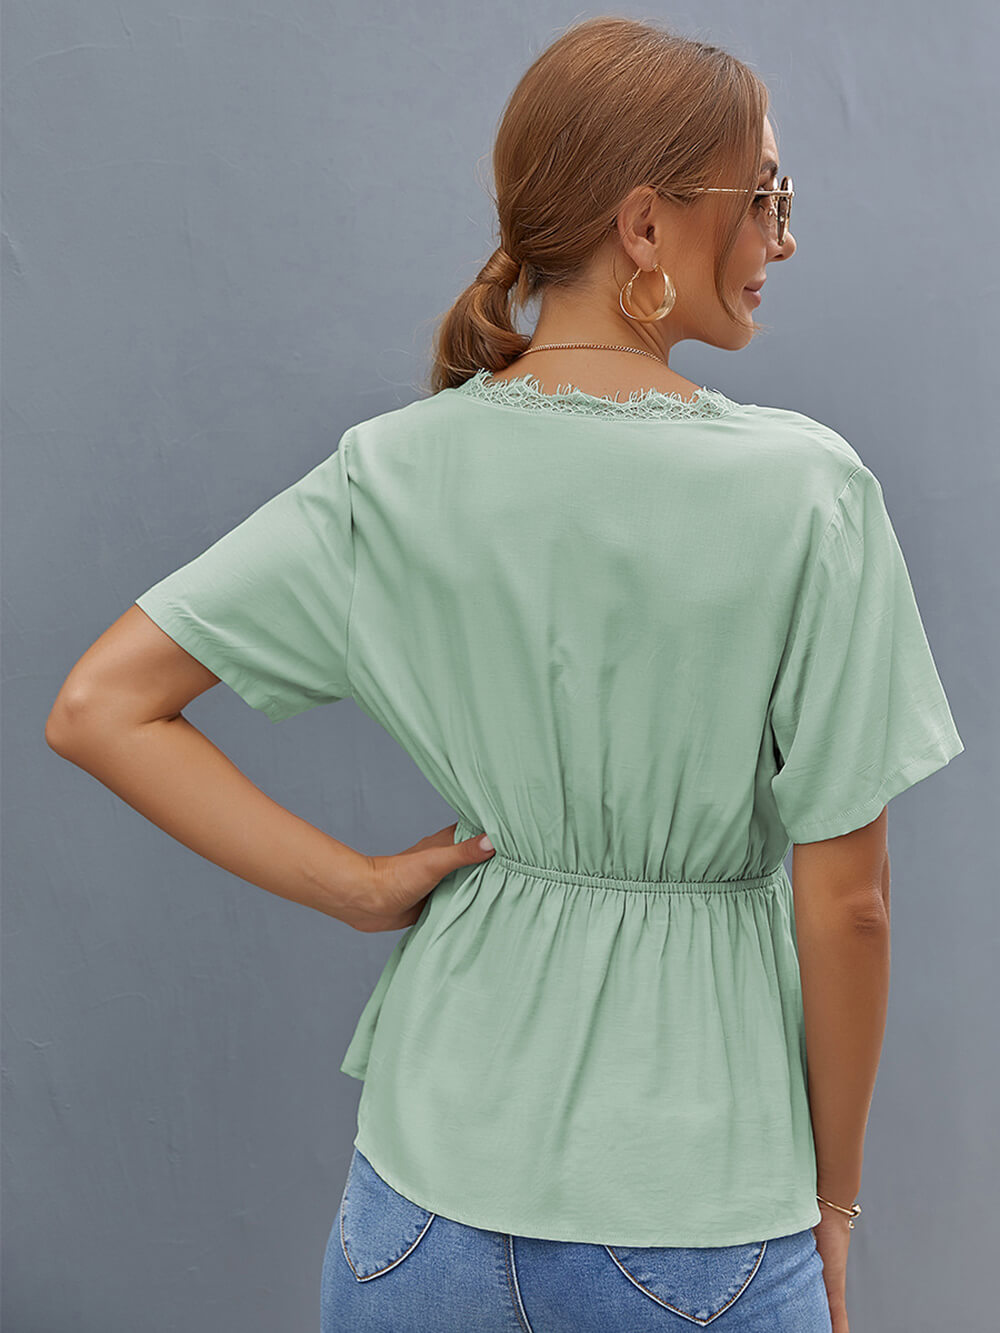 MECALA Women's V Neck Summer Short Sleeve Tops-Light green back view